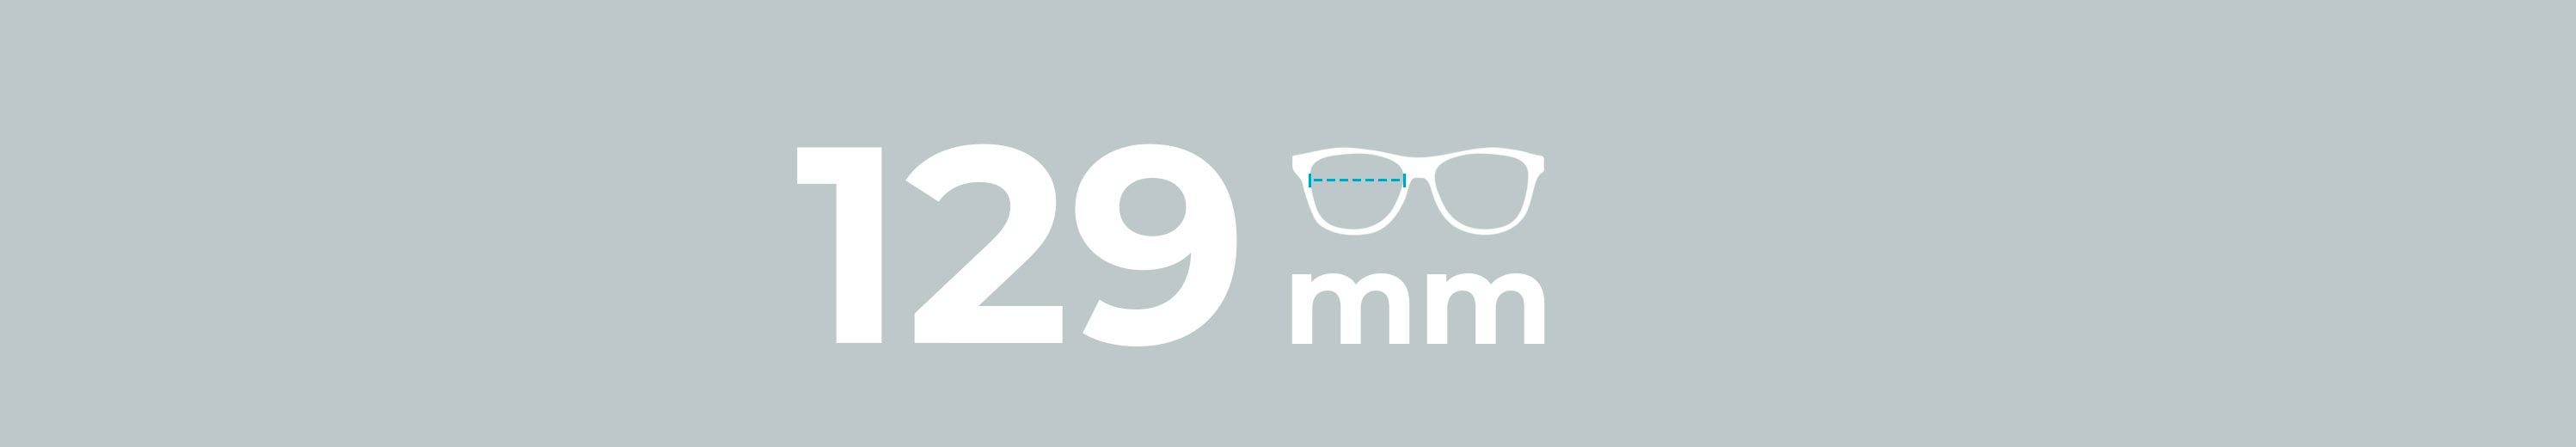 Lens Size: 129mm Glasses